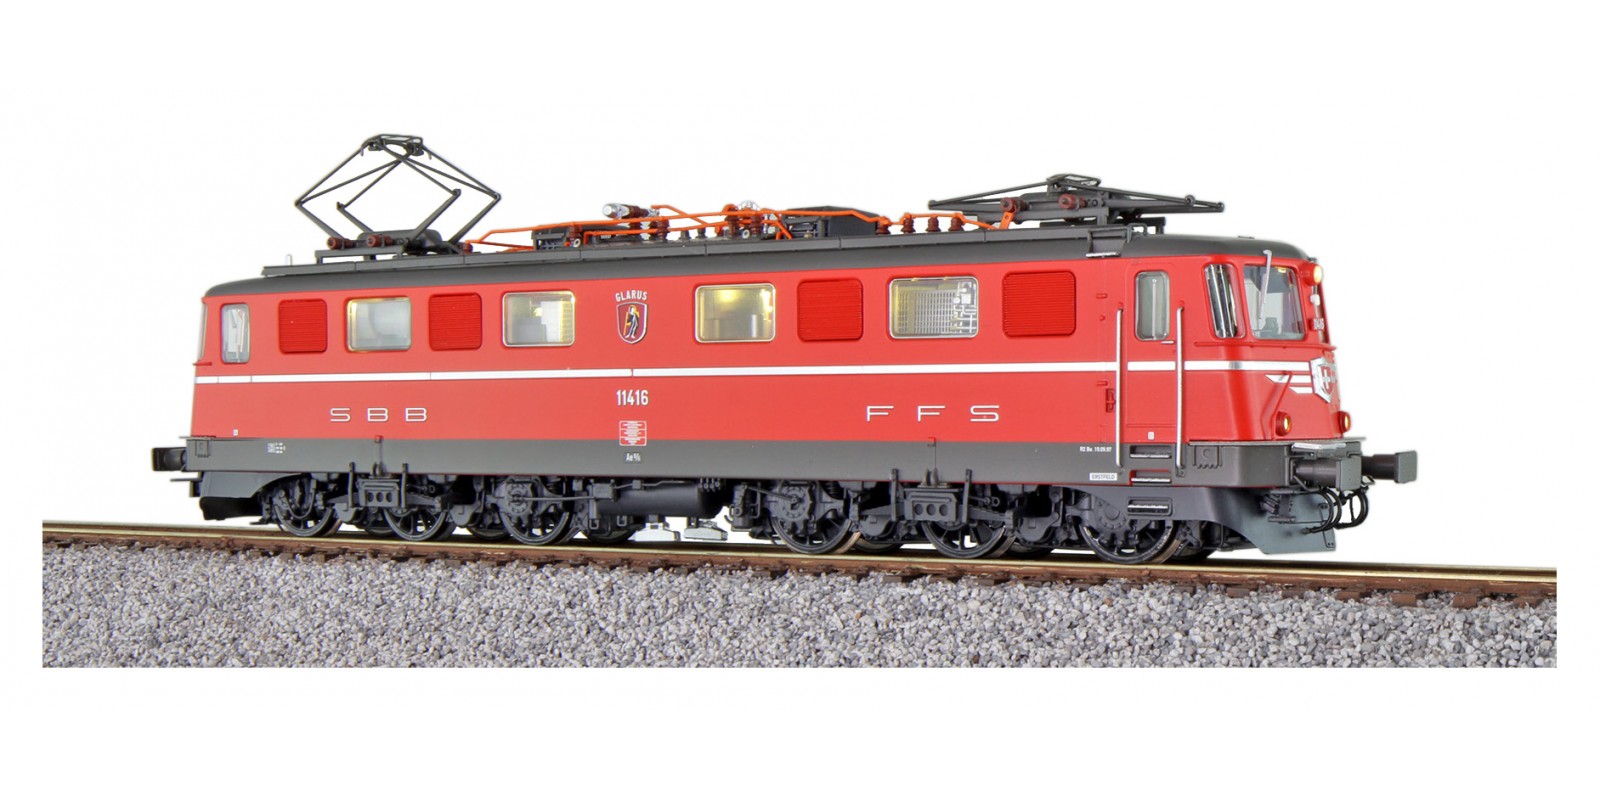 ES31533 Gauge H0 Electric locomotive Ae 6/6 11416 Glarus SBB, era V with sound